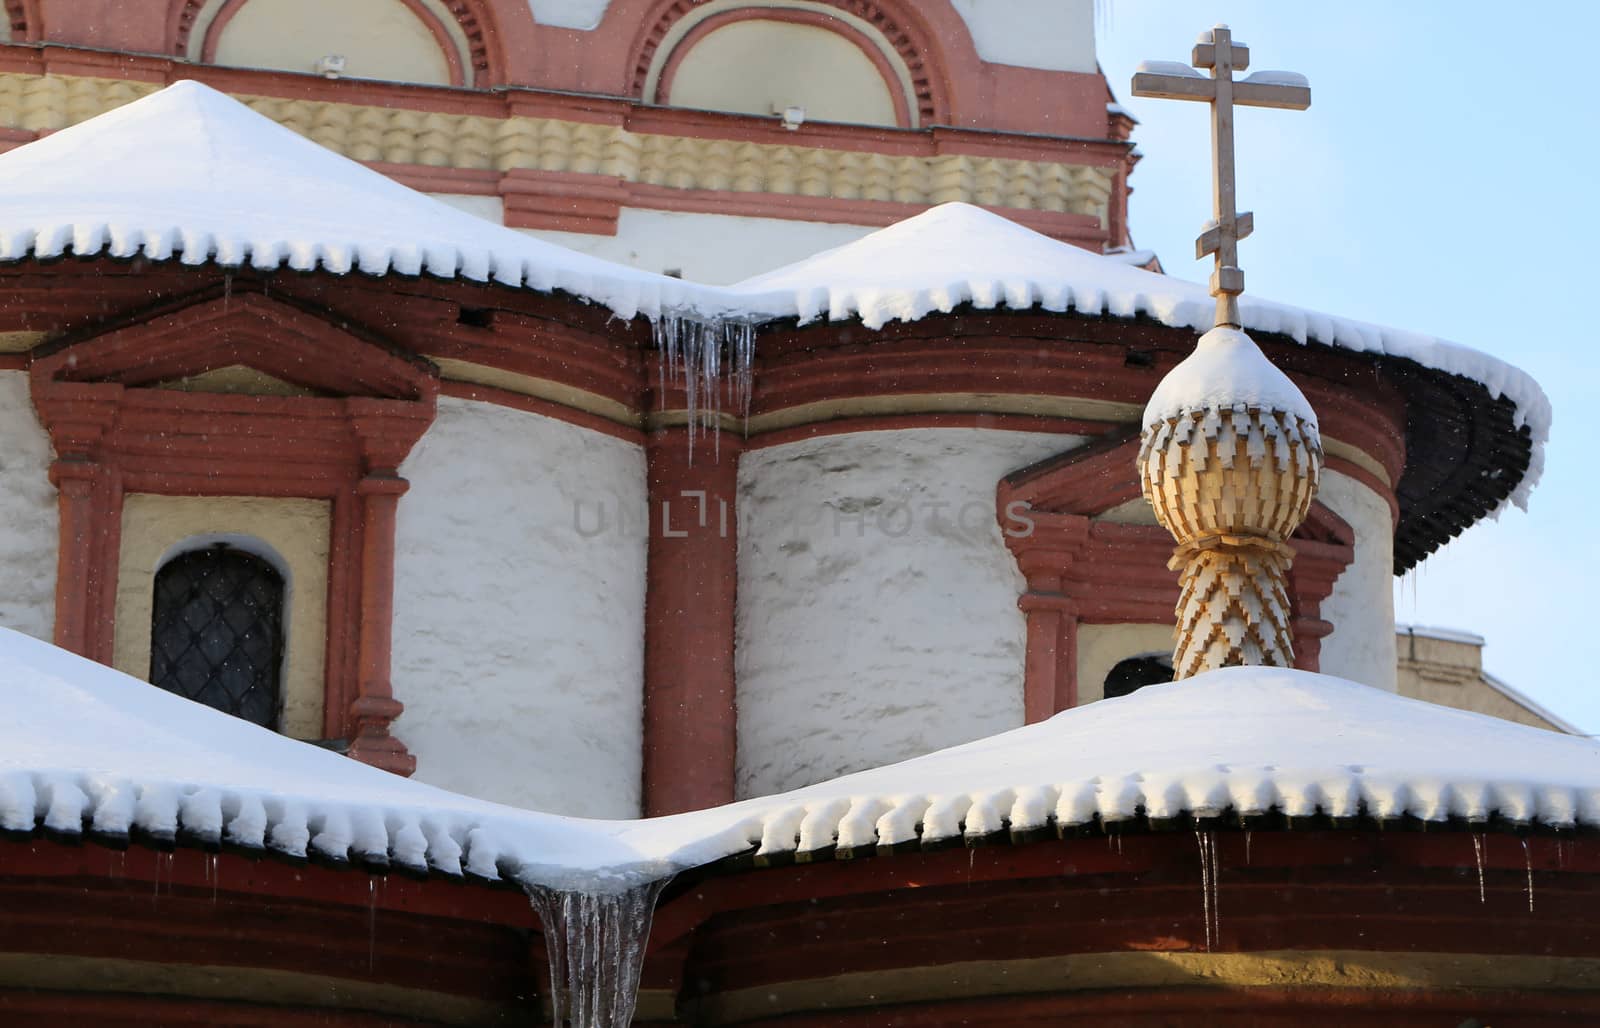 Orthodox church dome